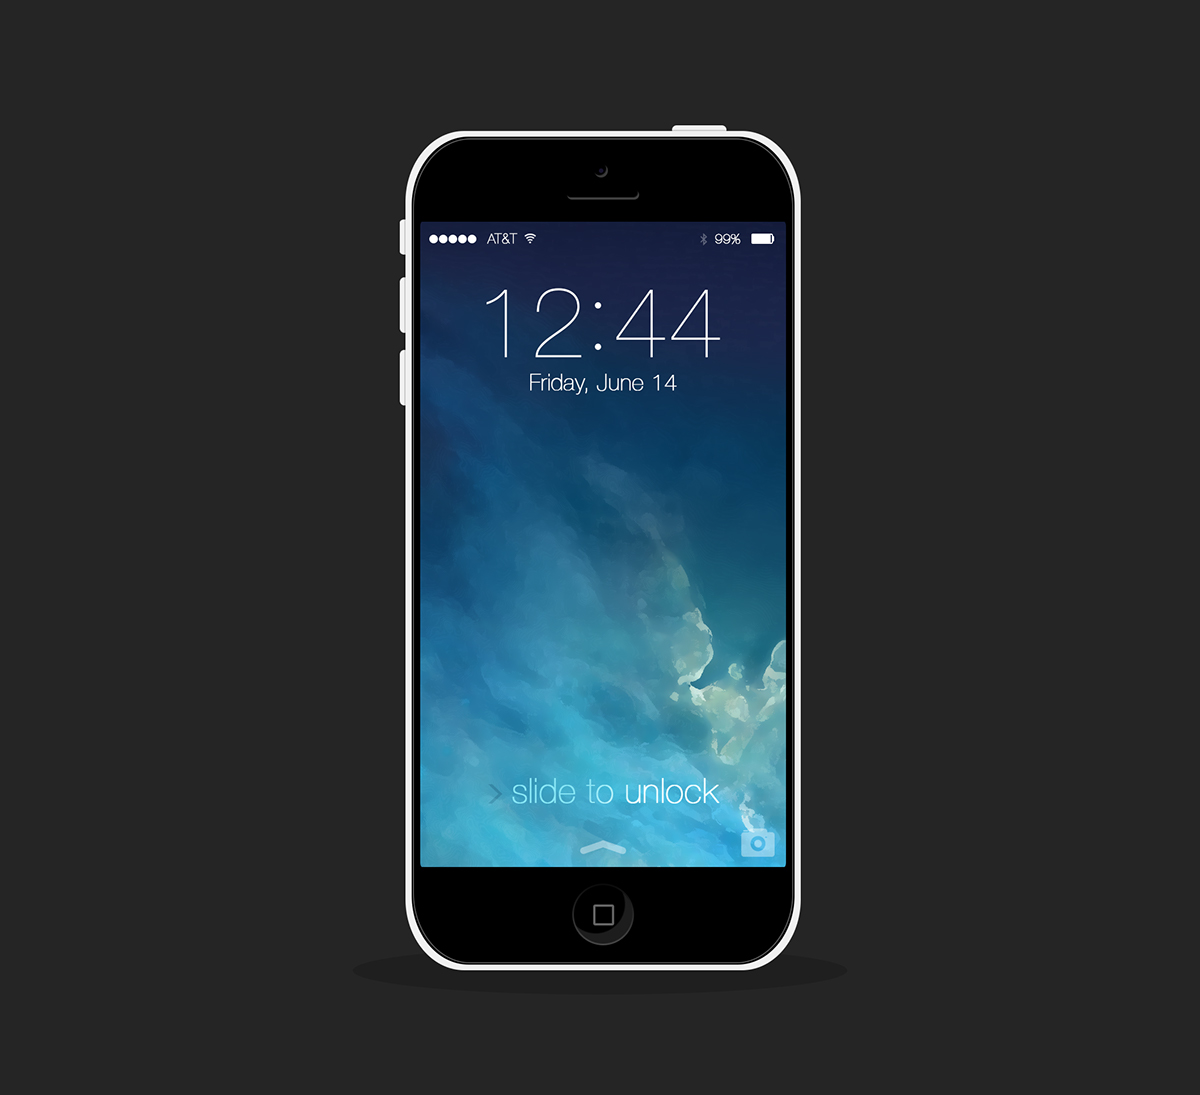 iphone 5c iphone 5c apple cellphone iOS 7 GUI flat minimal concept art